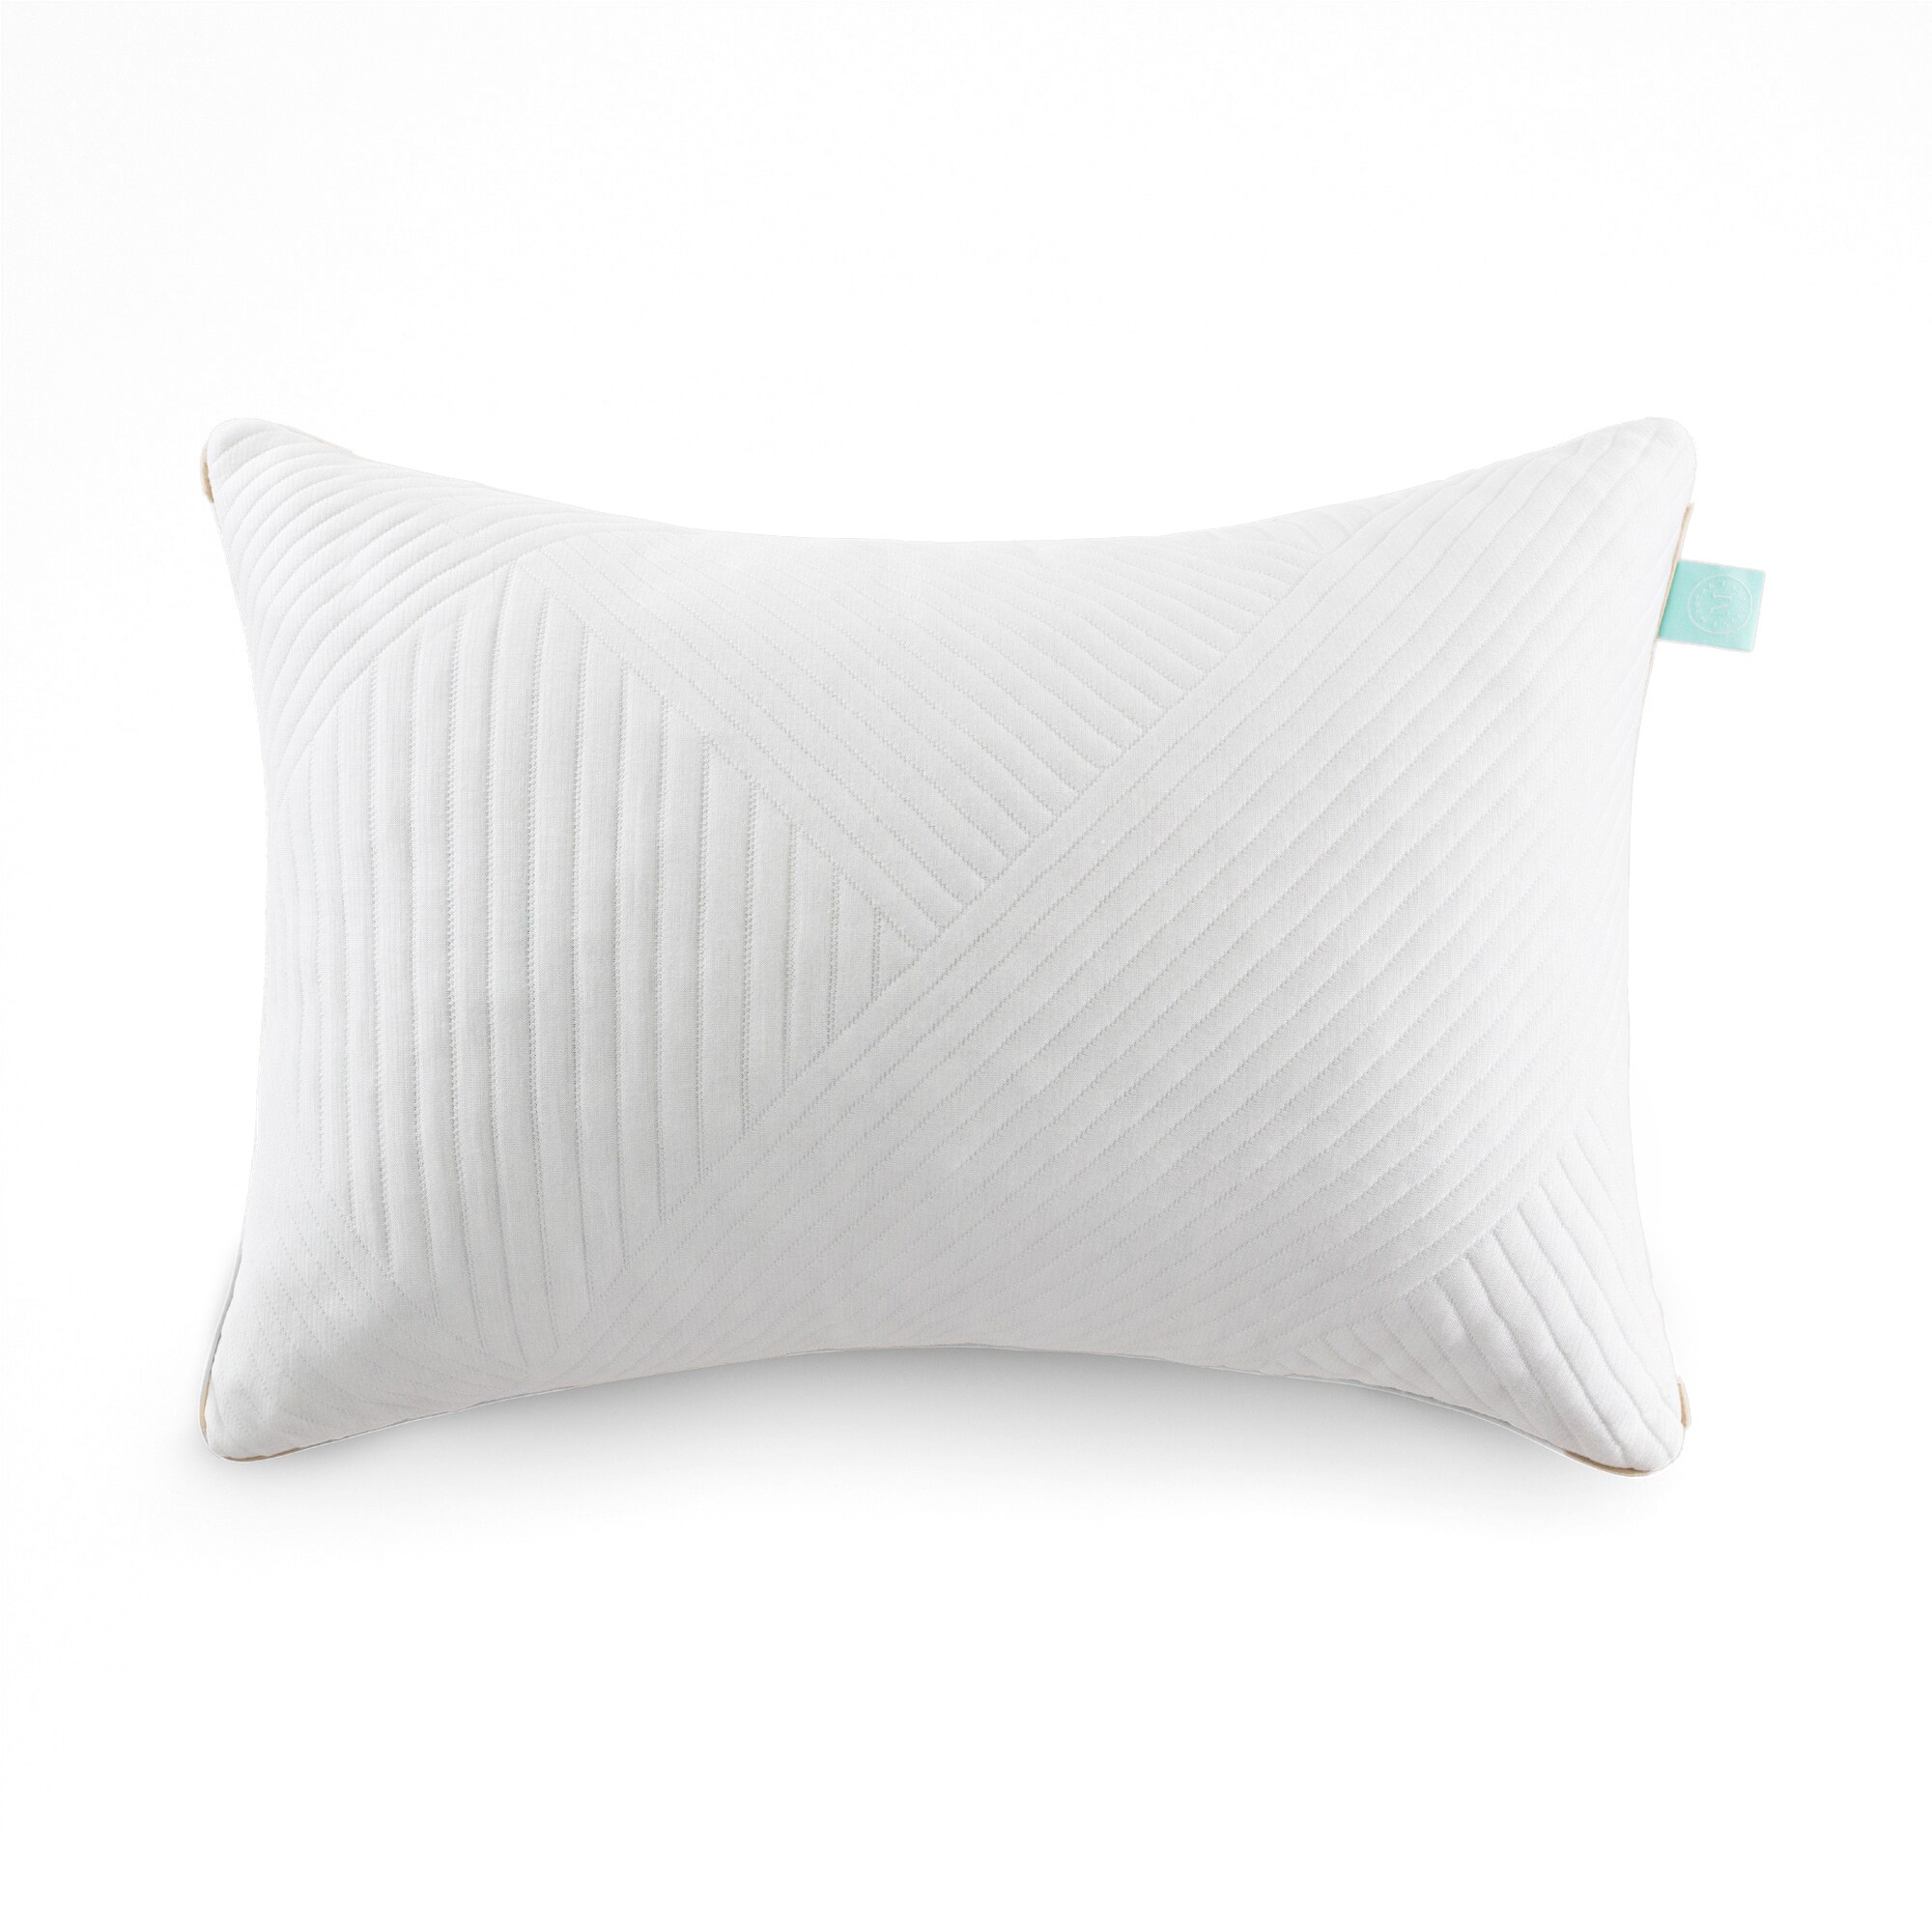 Gainsborough Tencel Surround Memory Foam Dual Contour Medium Profile Pillow 